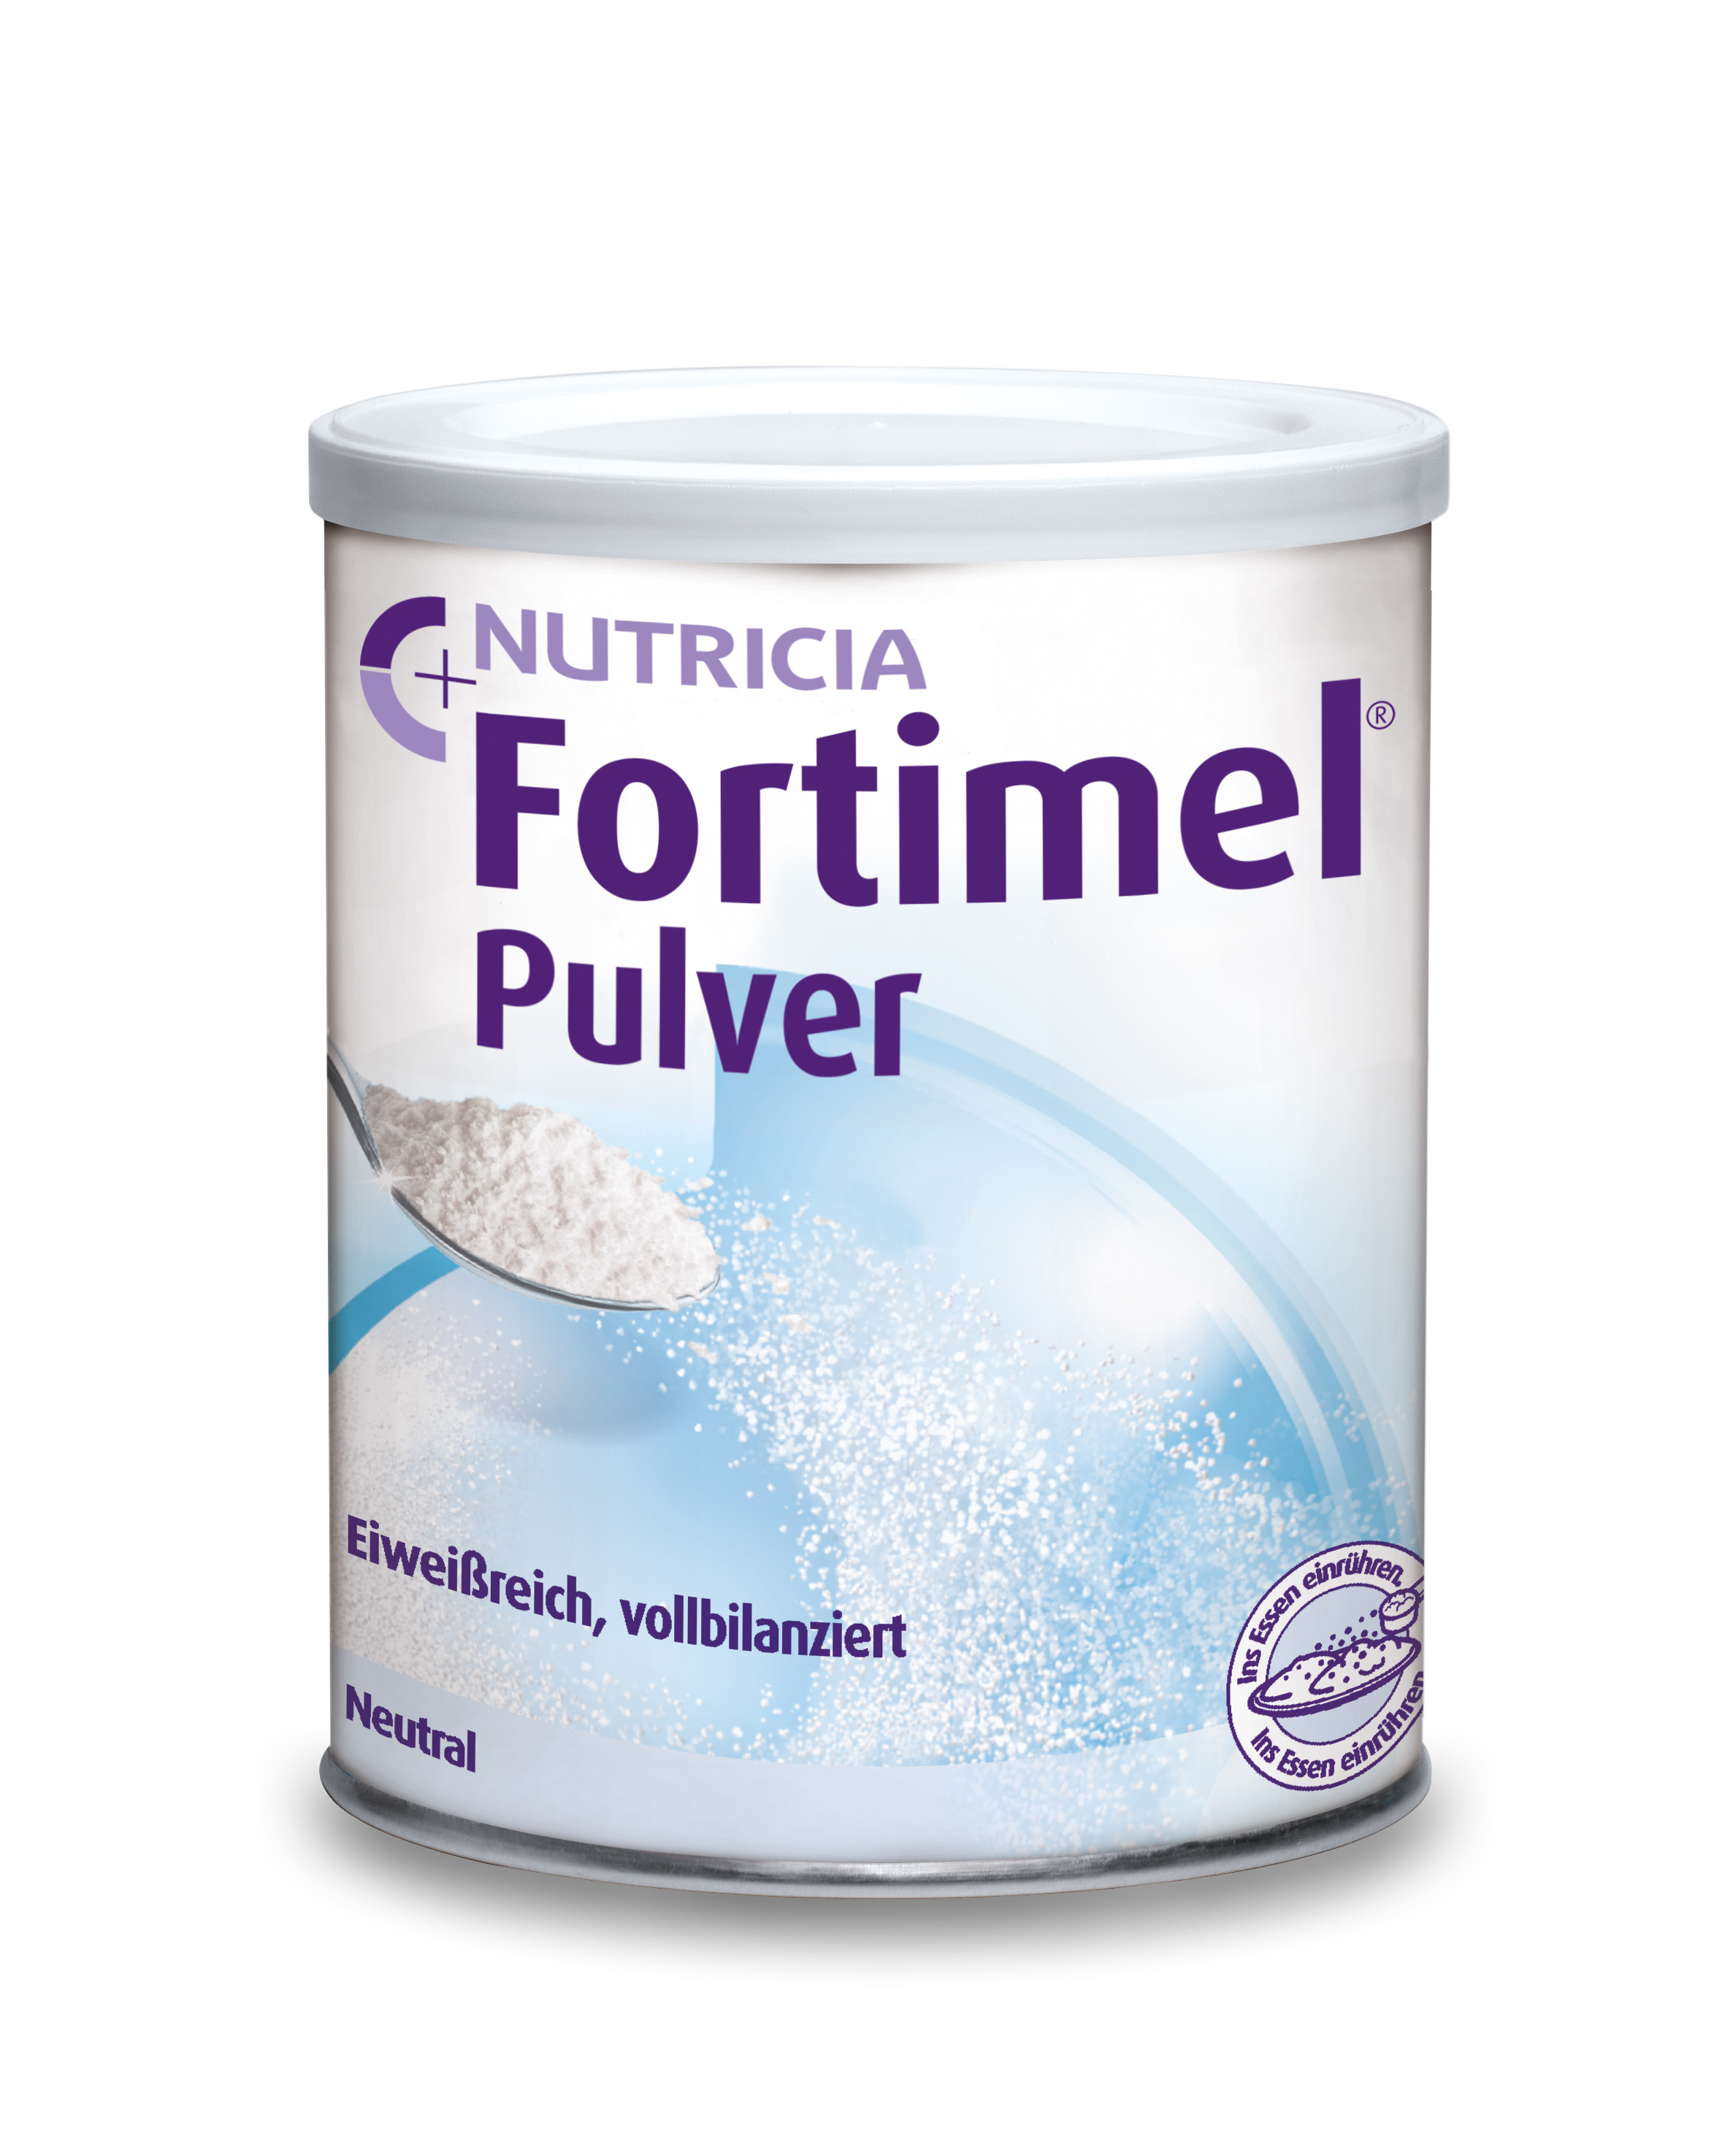 Fortimel Extra 2kcal Complément Nutritionnel Oral Multipack Mixte  Bouteilles 8x200ml